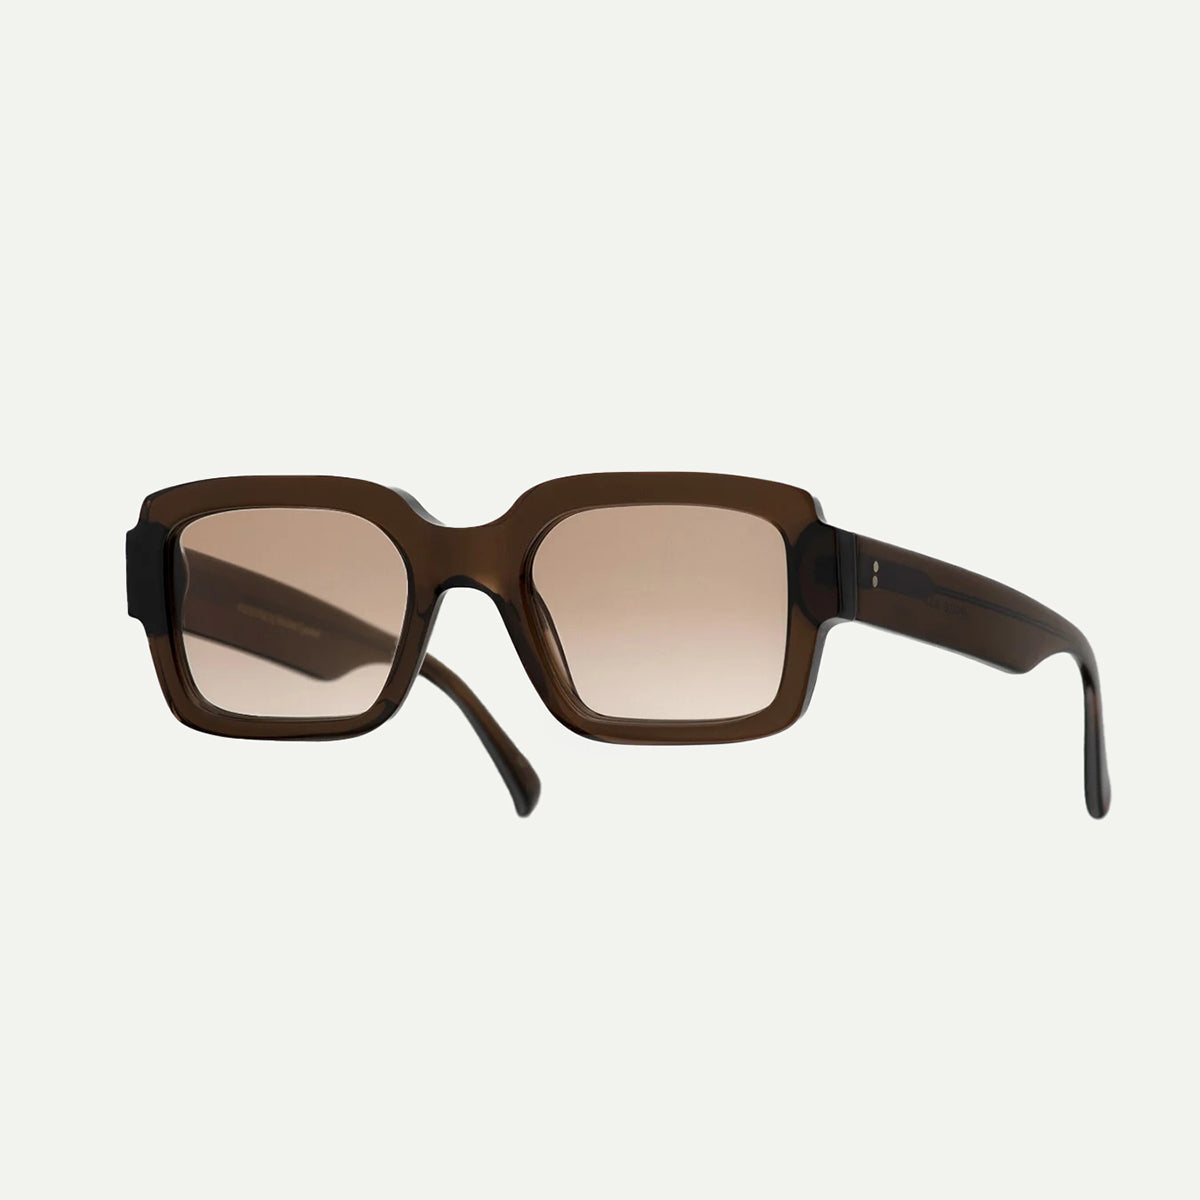 Monokel Eyewear Apollo Mat Cola Sunglasses